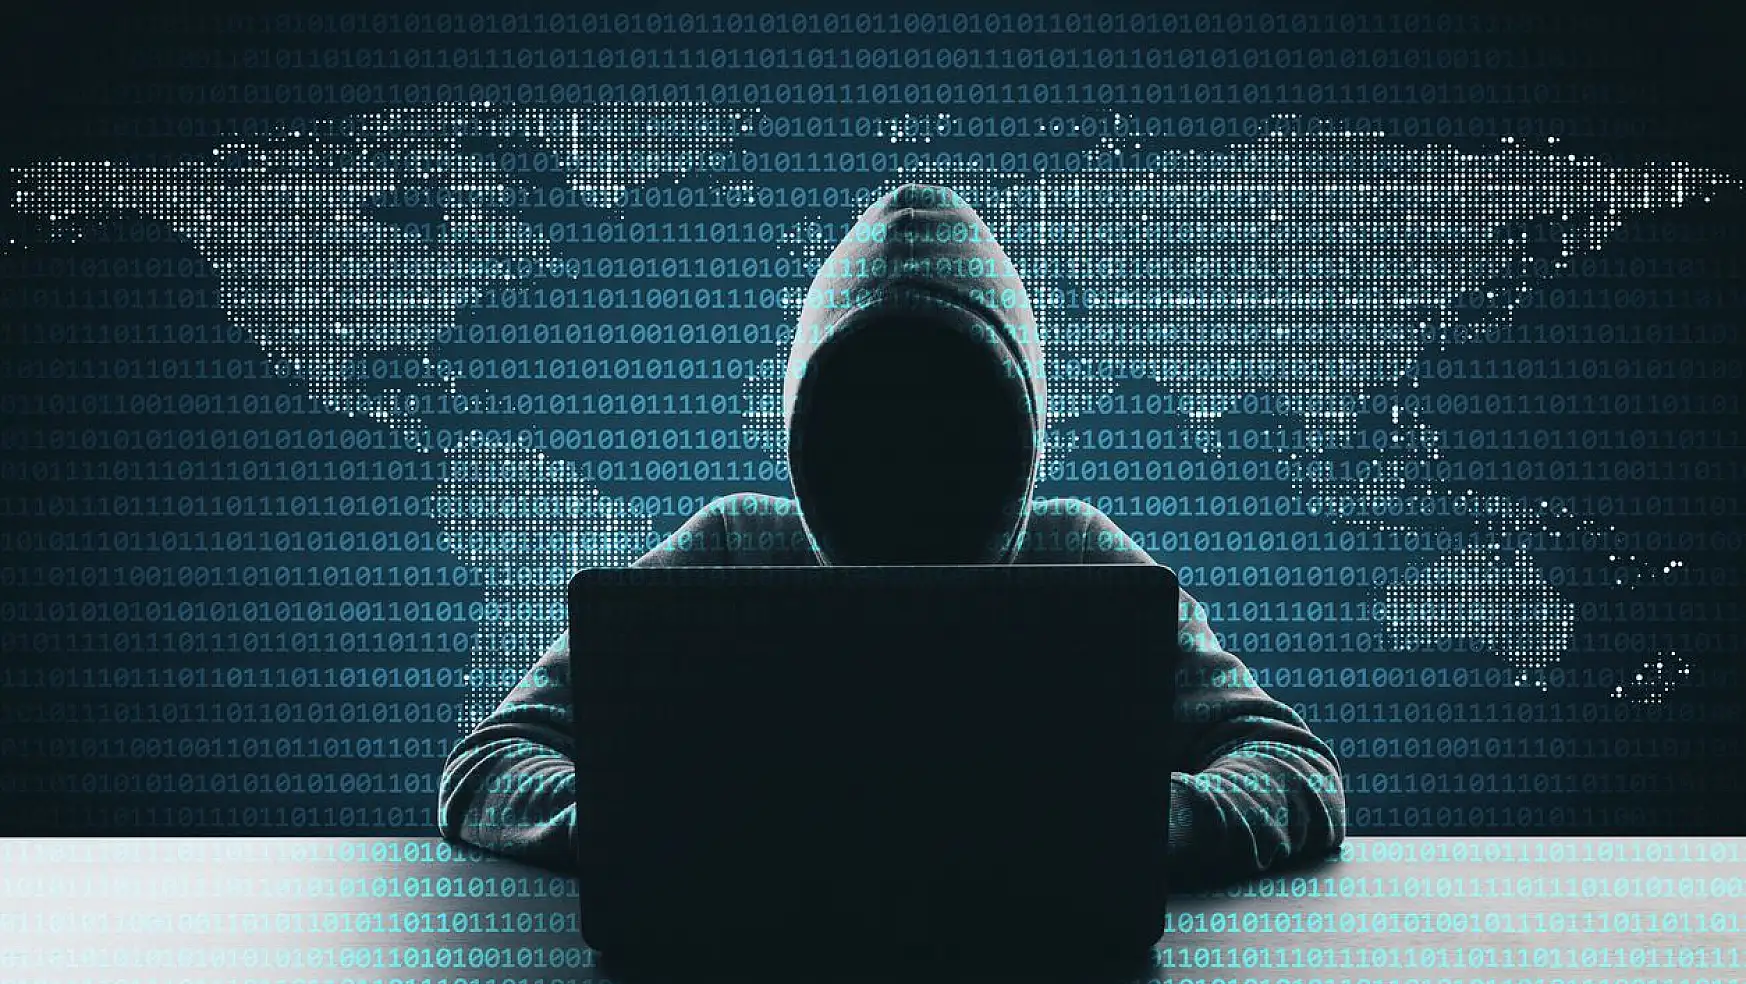 GTA 6'yı sızdıran hacker'a ömür boyu hapis cezası